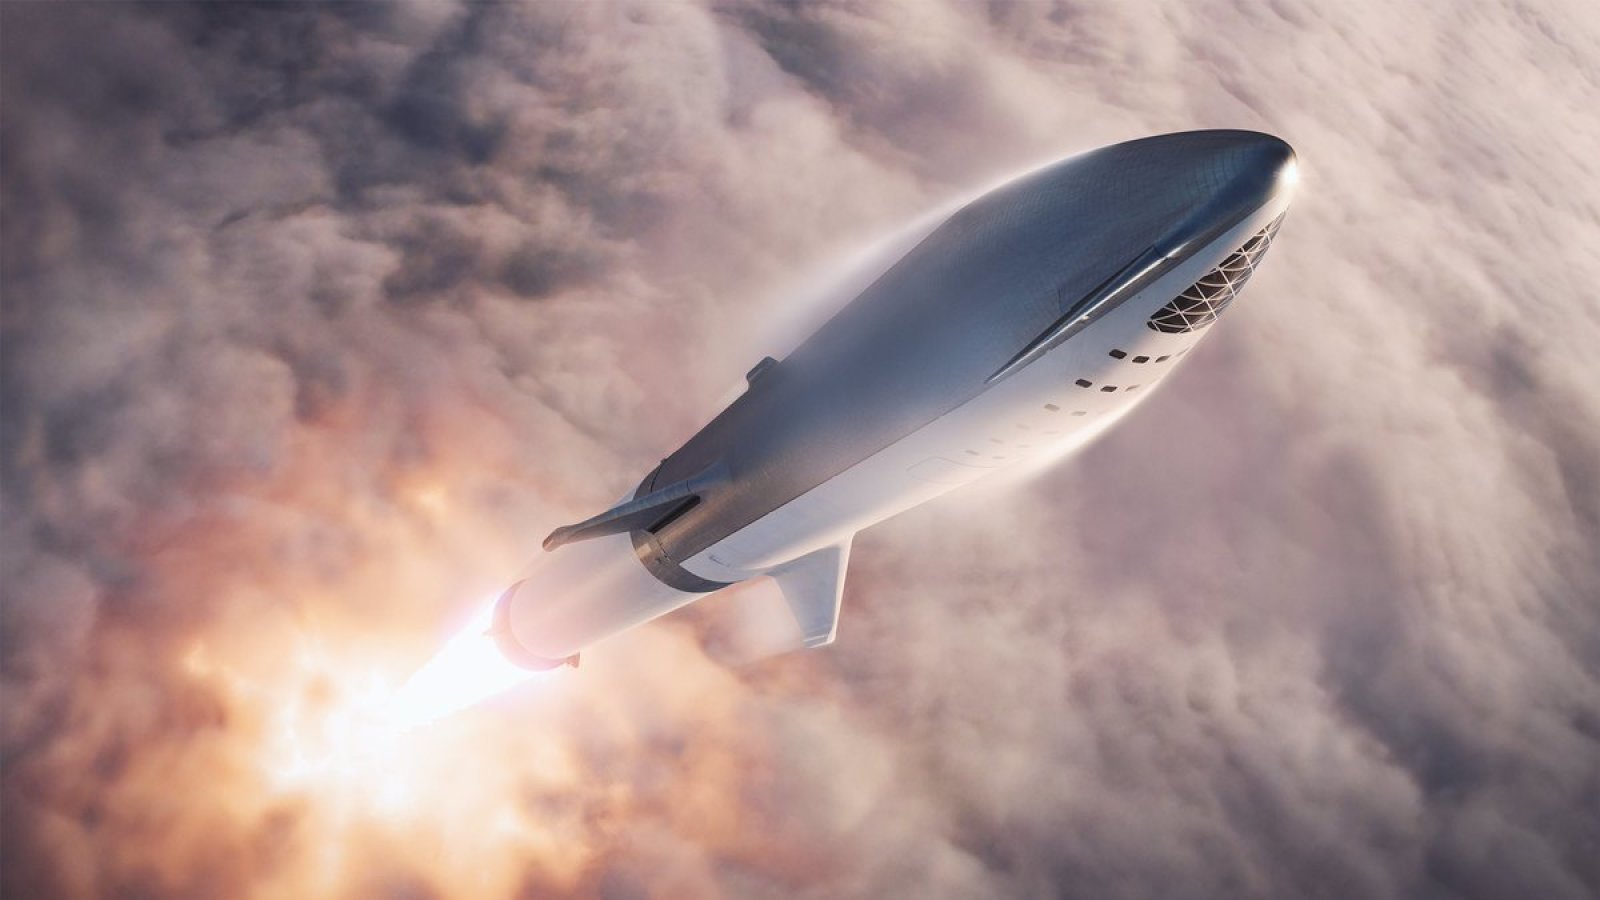 Ylon Musk renommé Big Falcon Rocket dans Starship